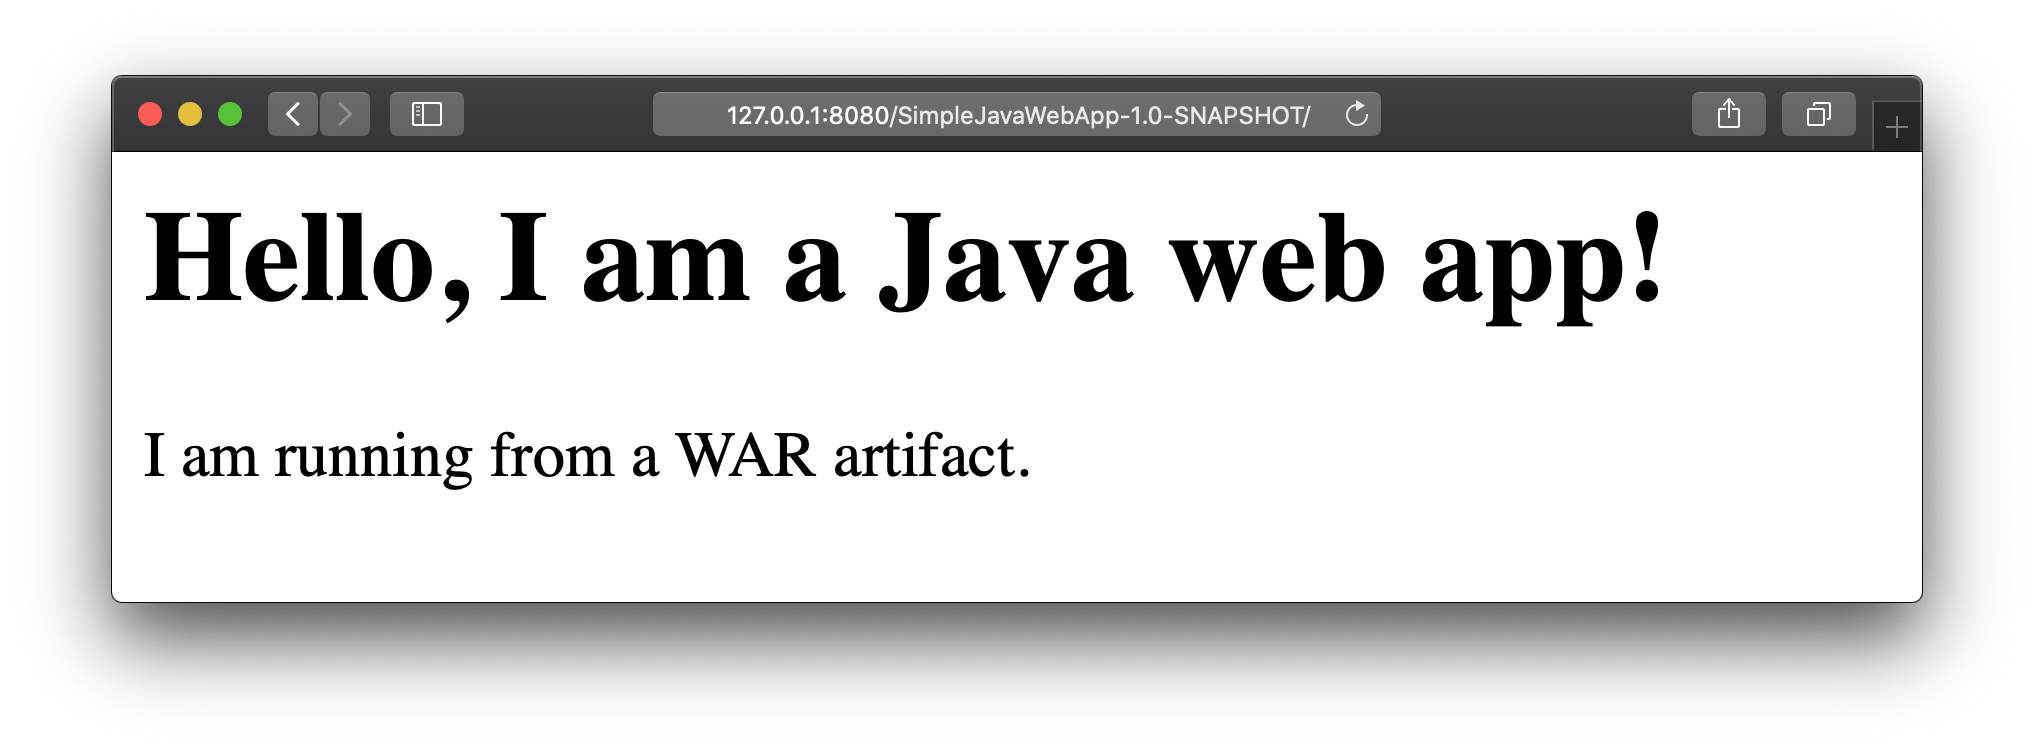 Simple Java Web App Demo page